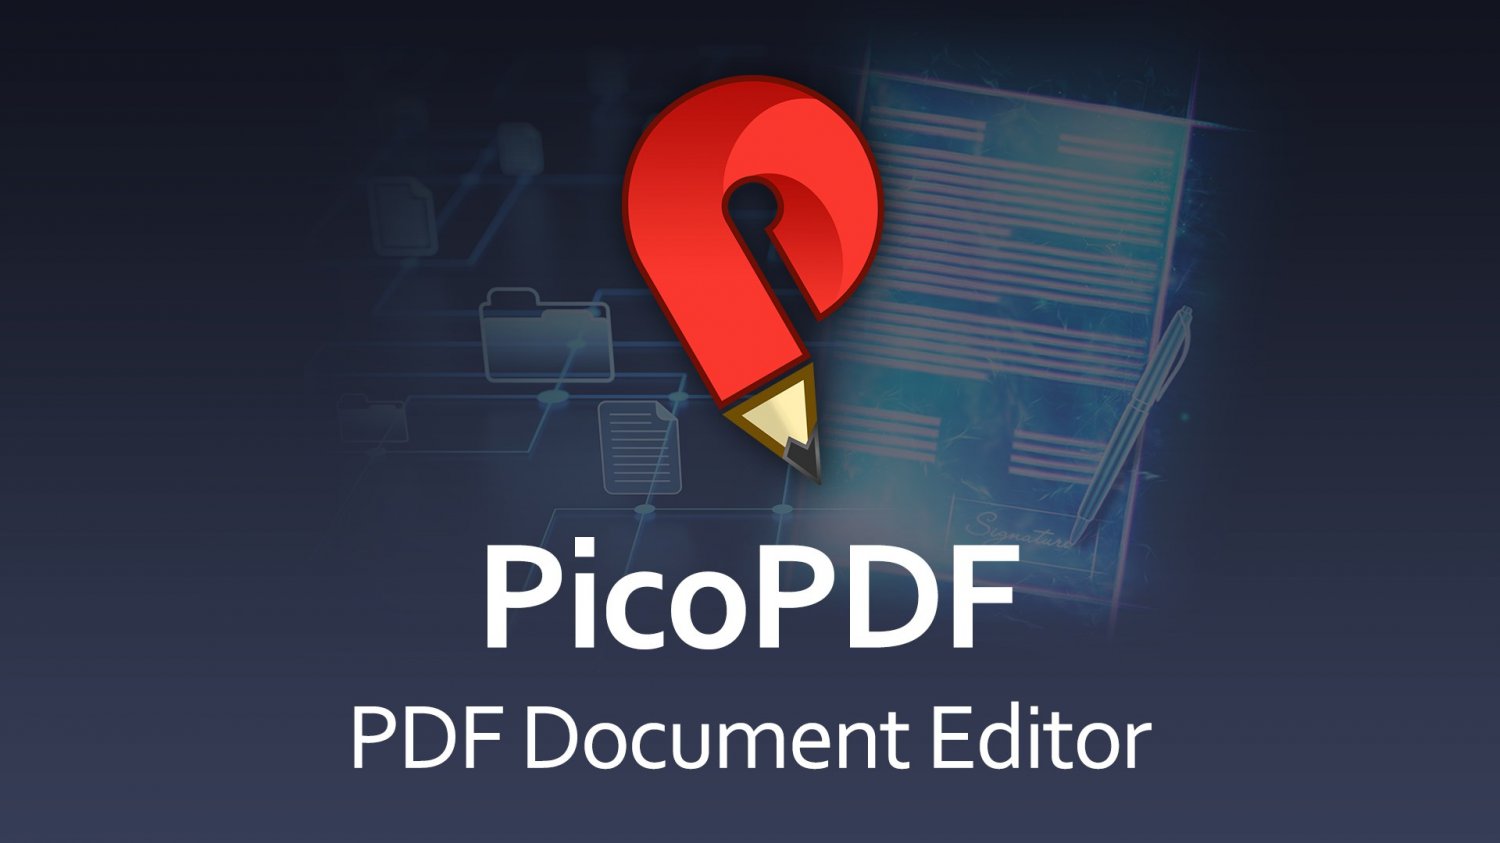 PicoPDF PDF Editing Software